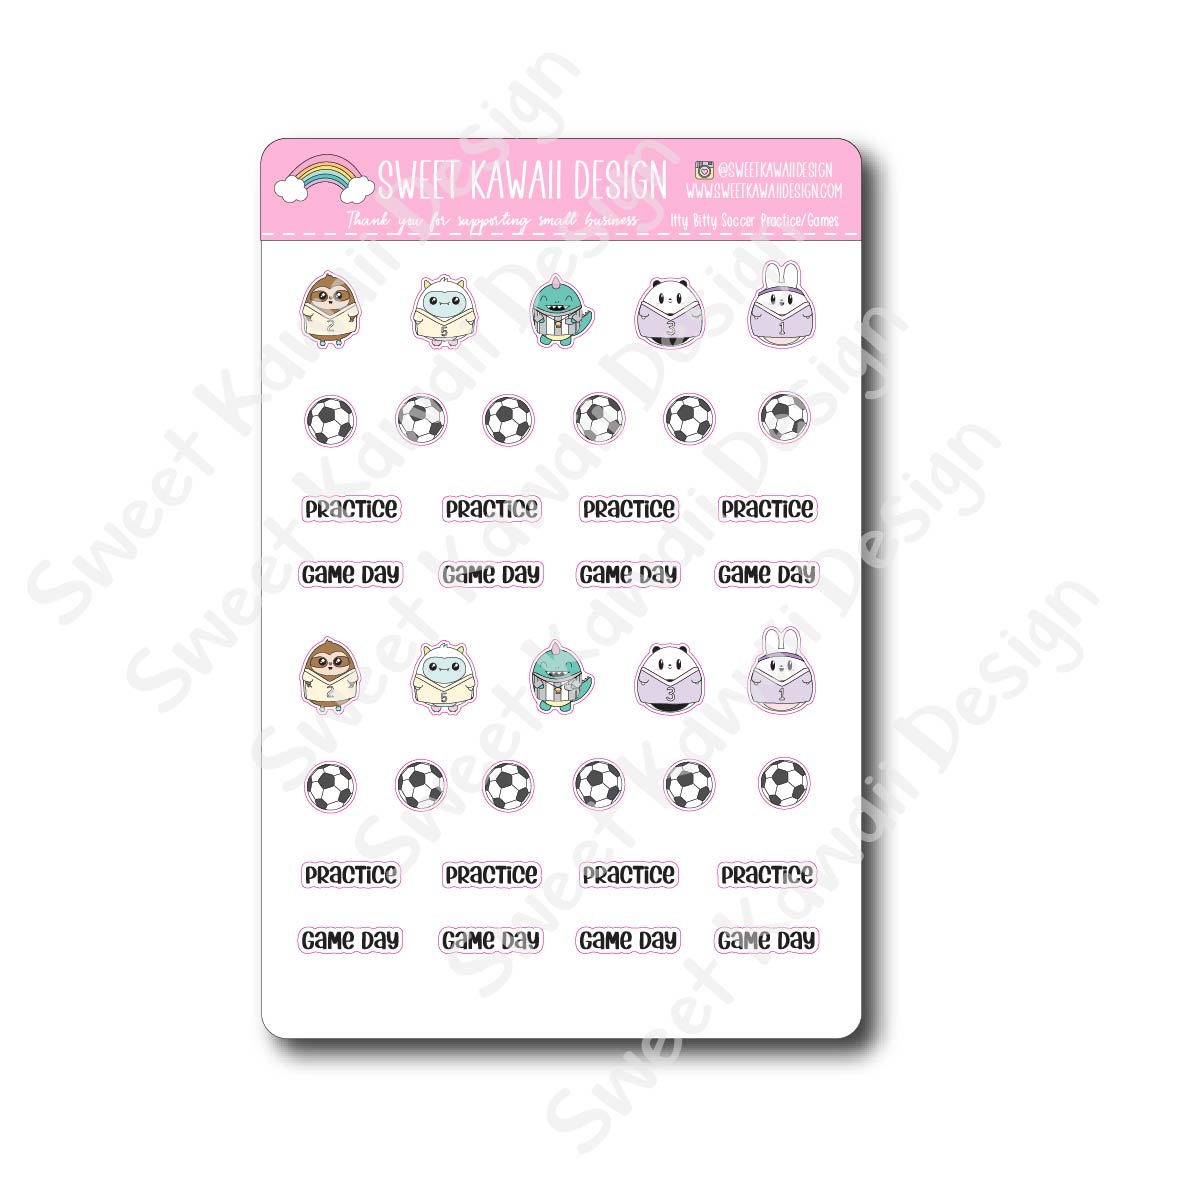 Kawaii Soccer Stickers - Games/Practice